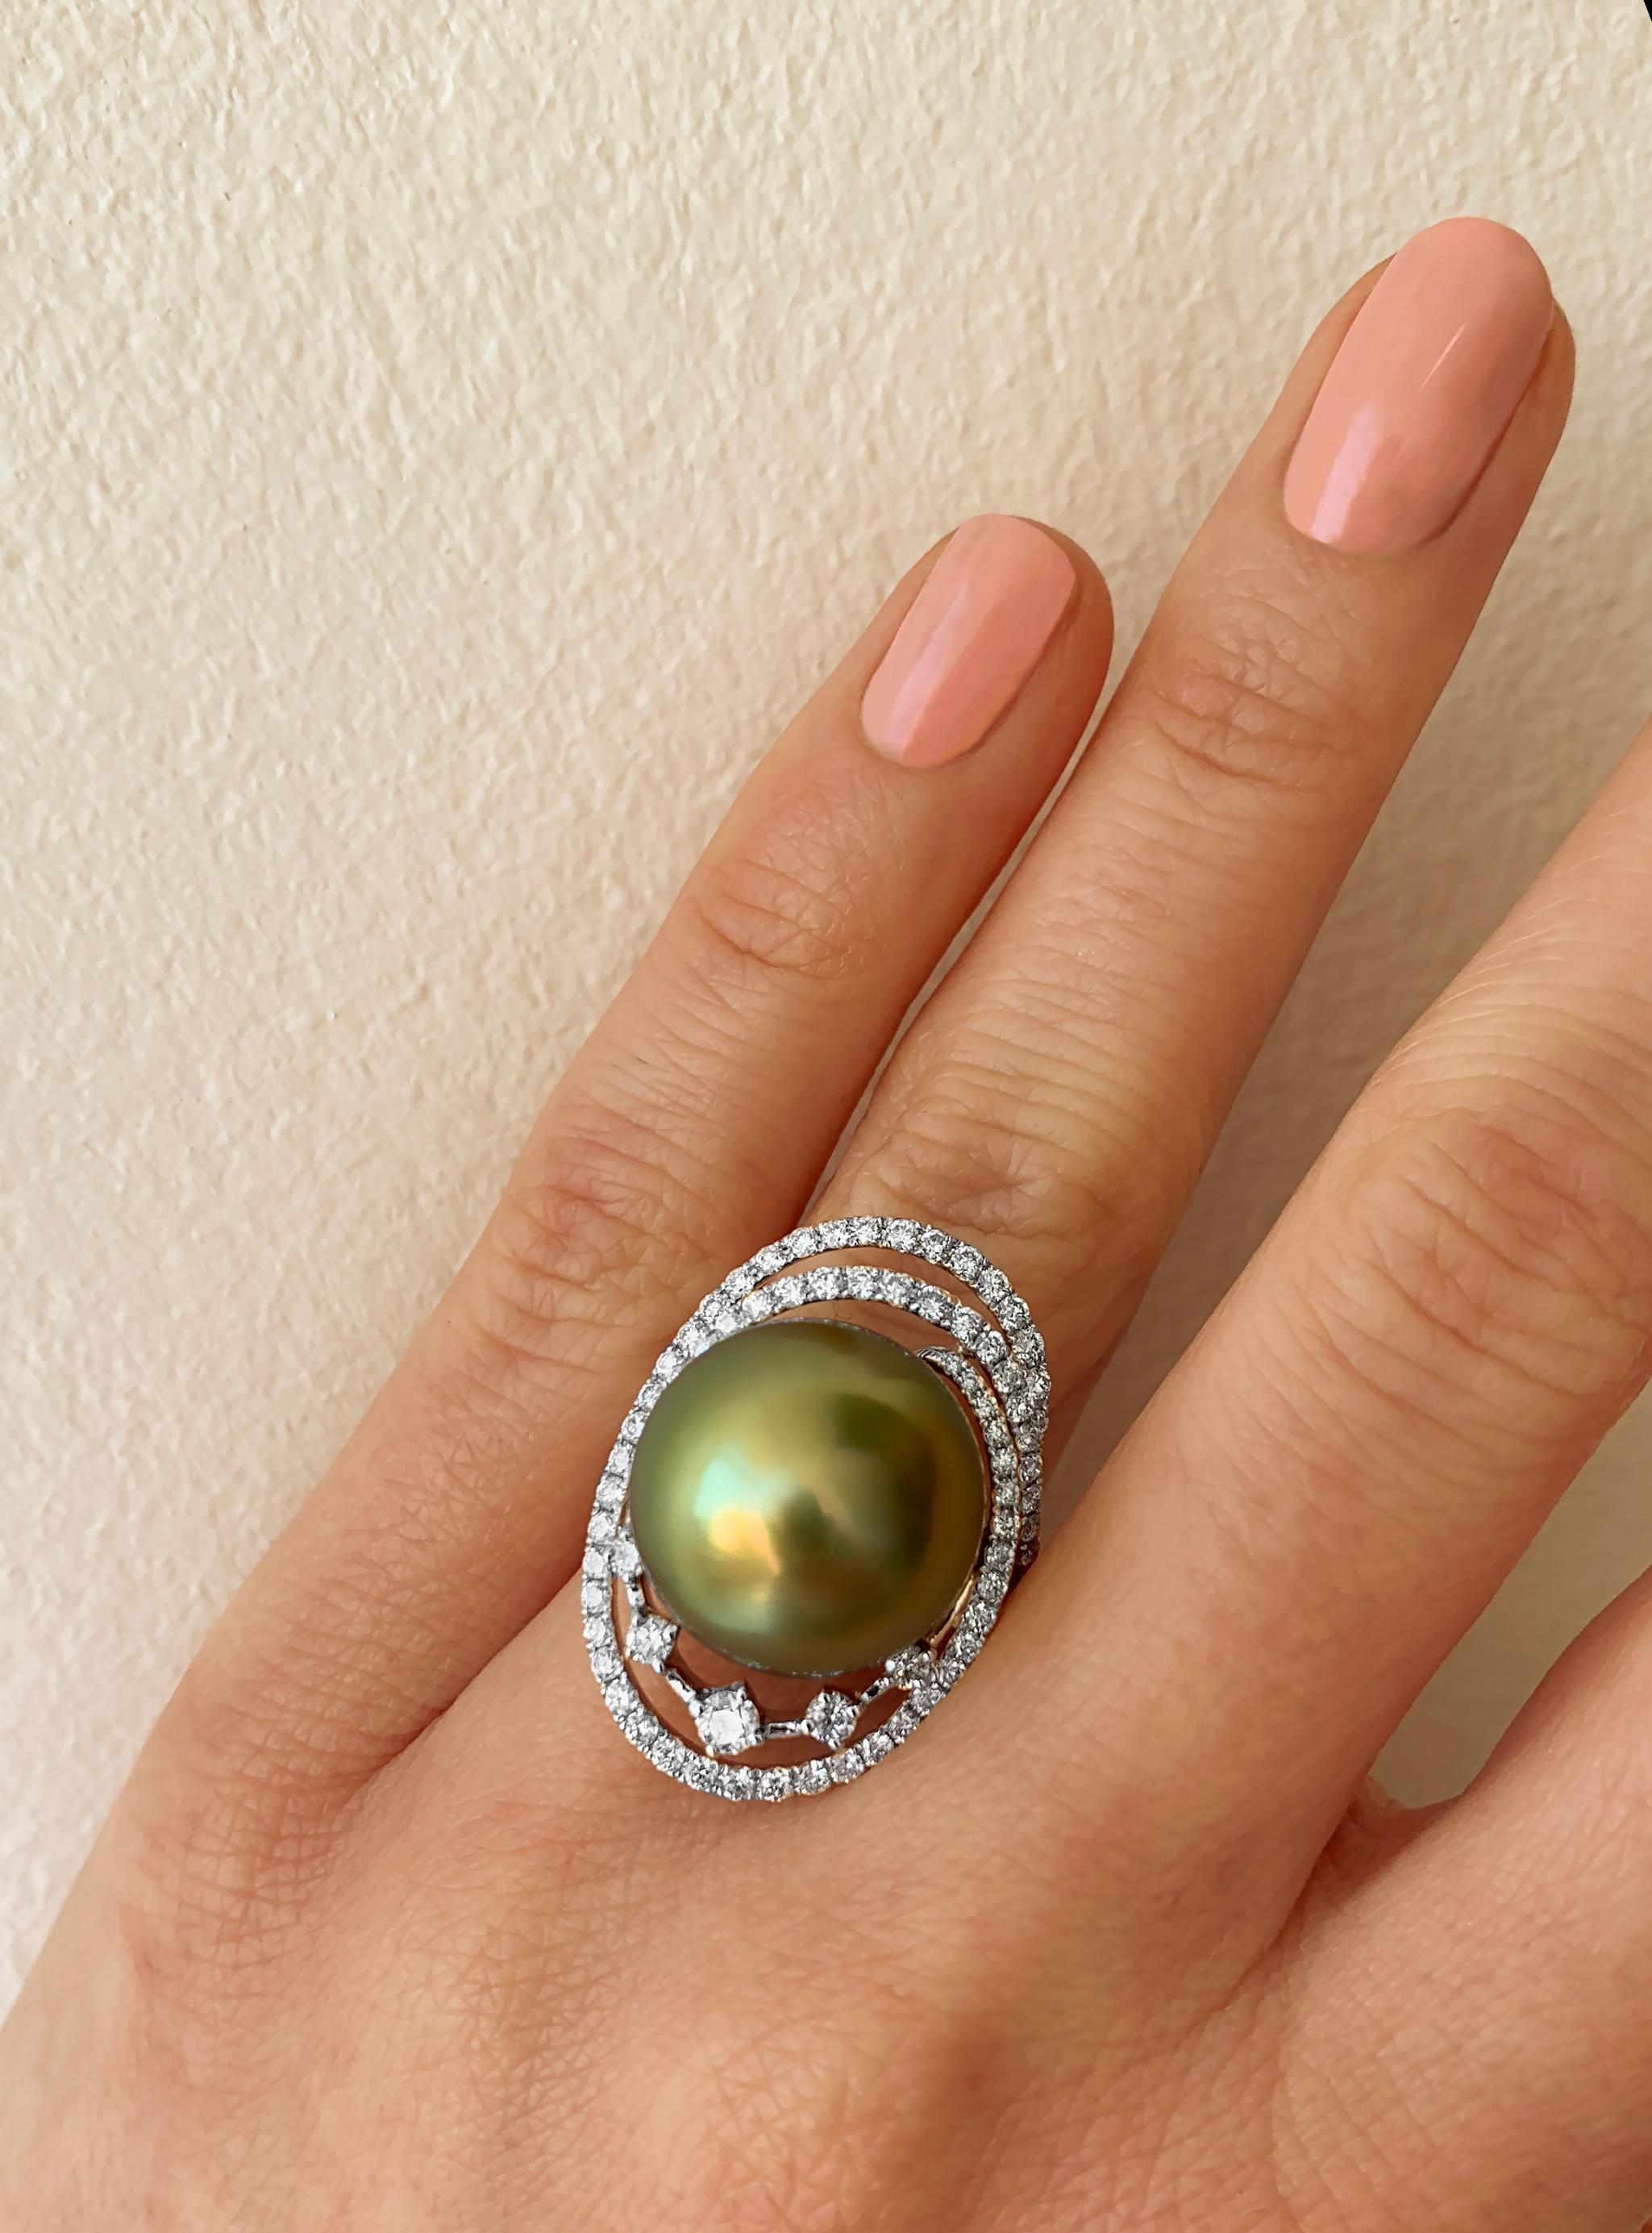 Yoko London Pistachio-Colored Tahitian Pearl and Diamond Ring in 18K White Gold 1